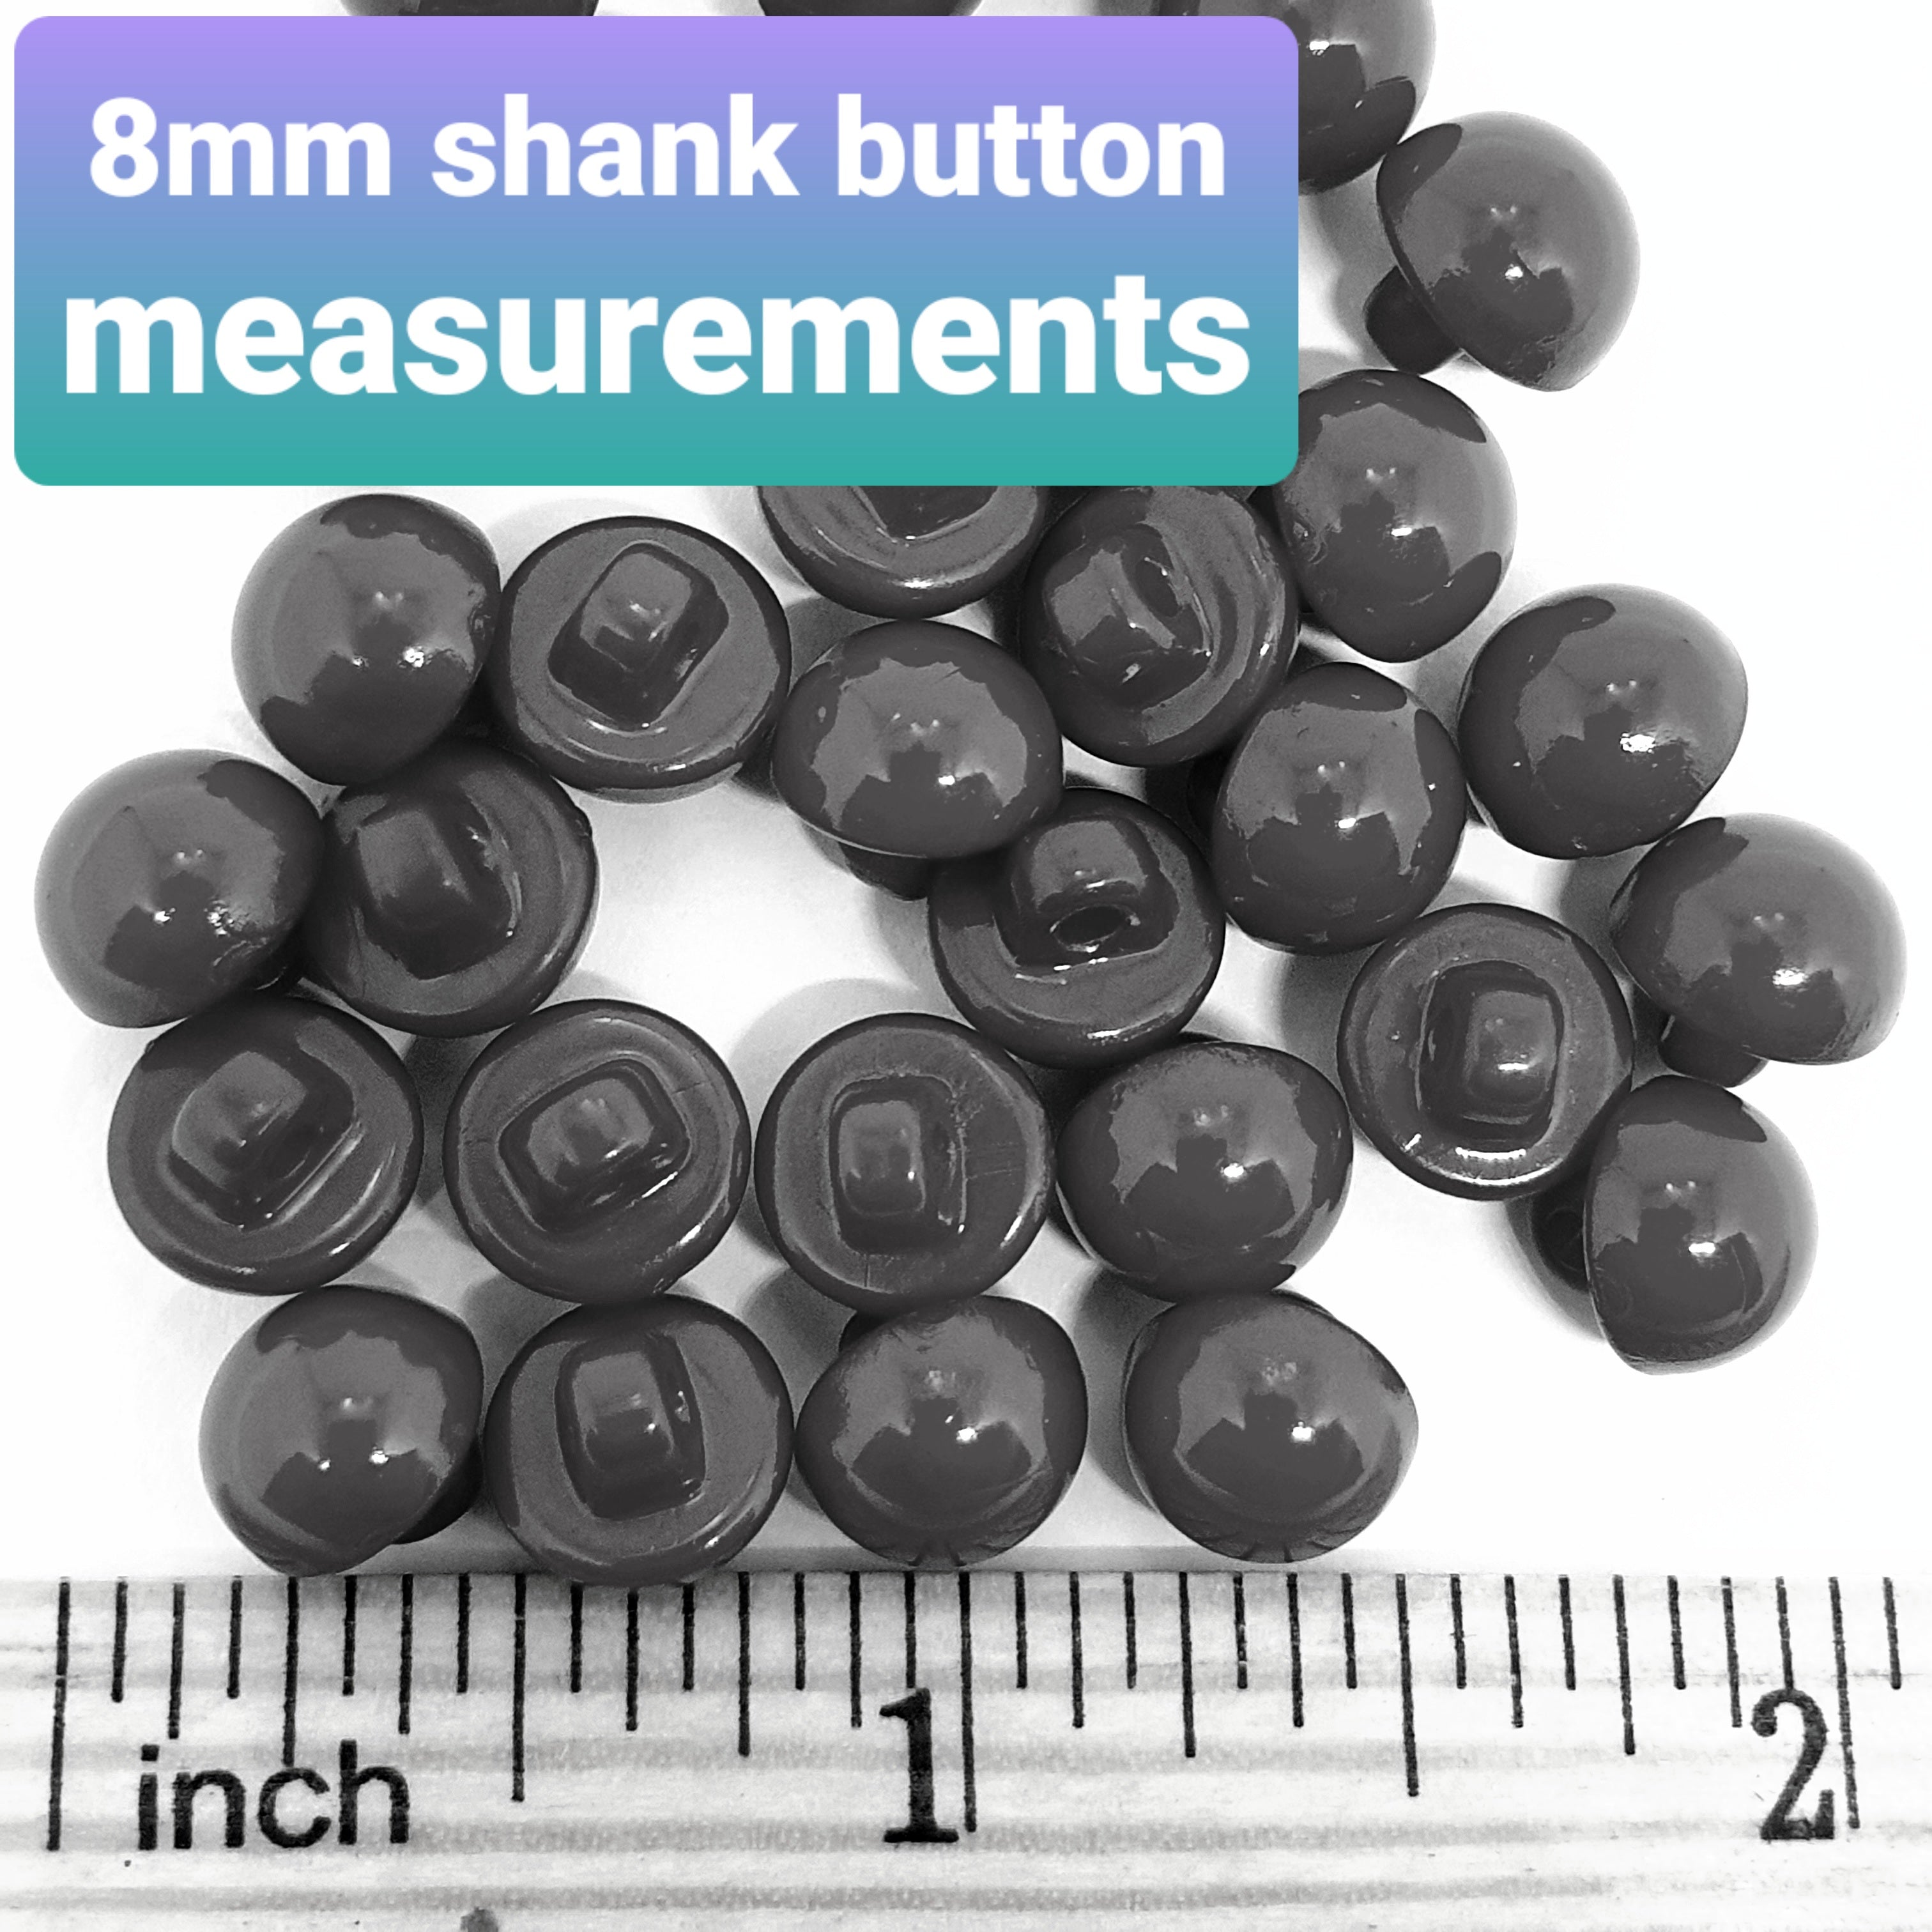 MajorCrafts 30pcs 8mm White High-Grade Acrylic Small Round Sewing Mushroom Shank Buttons